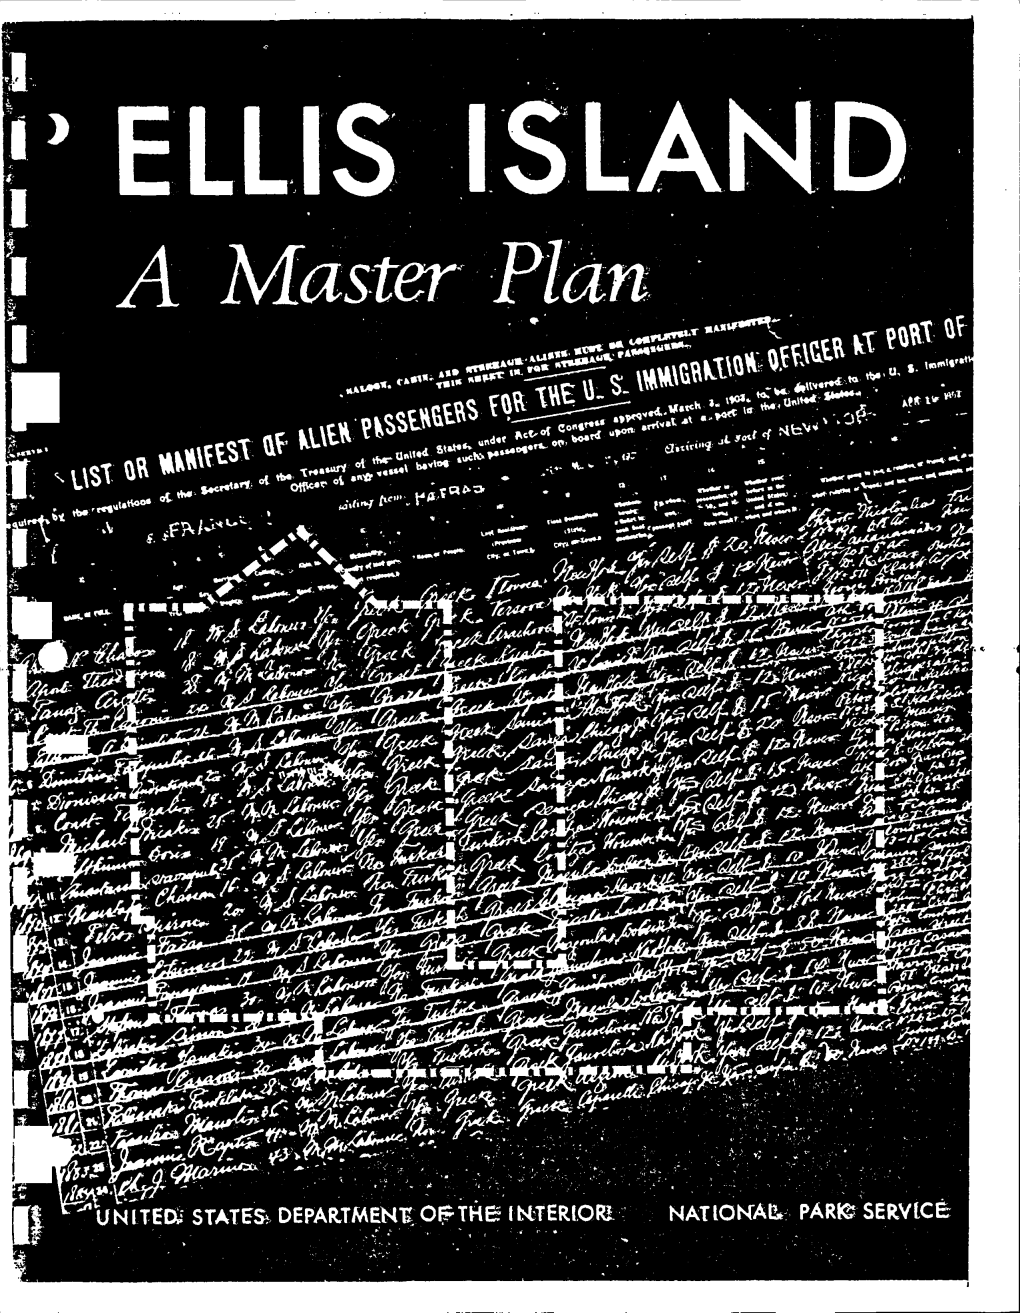 A Master Plan for Ellis Island, New York